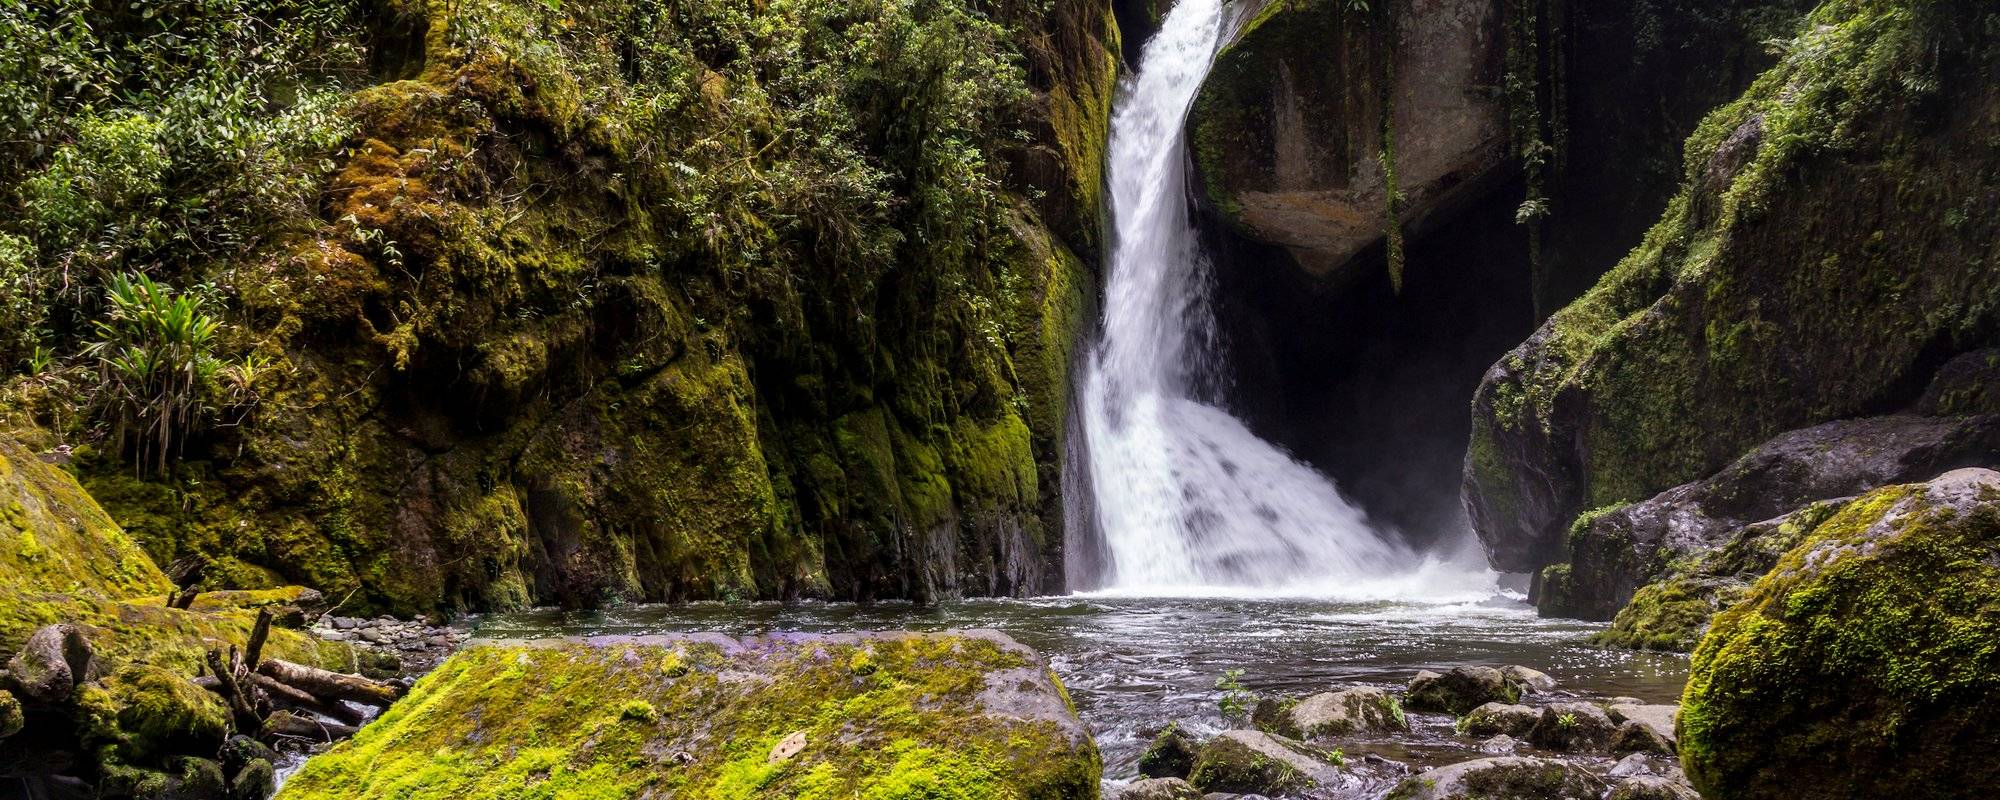 San Gerardo de Dota Waterfall, Costa Rica.